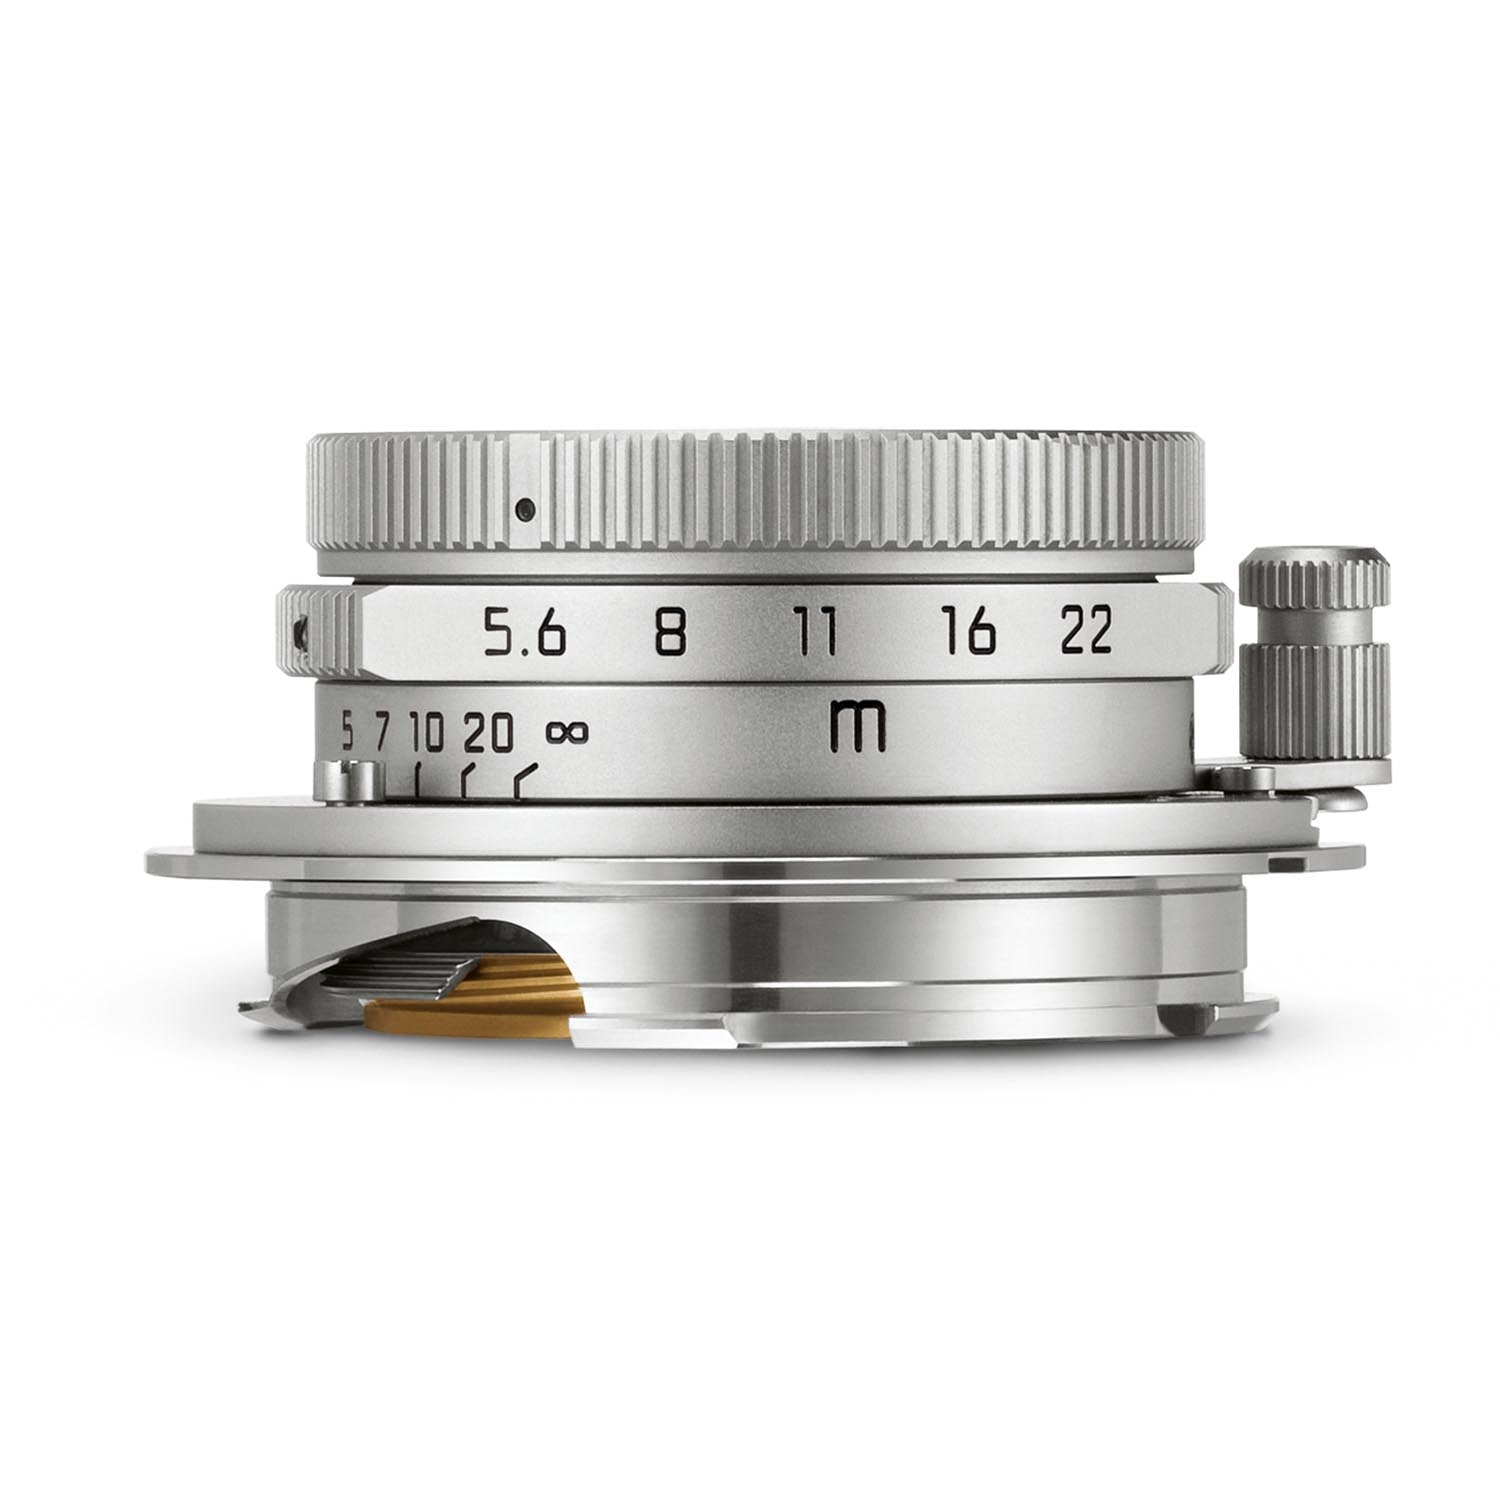 Leica 28mm f5.6 Summaron-M